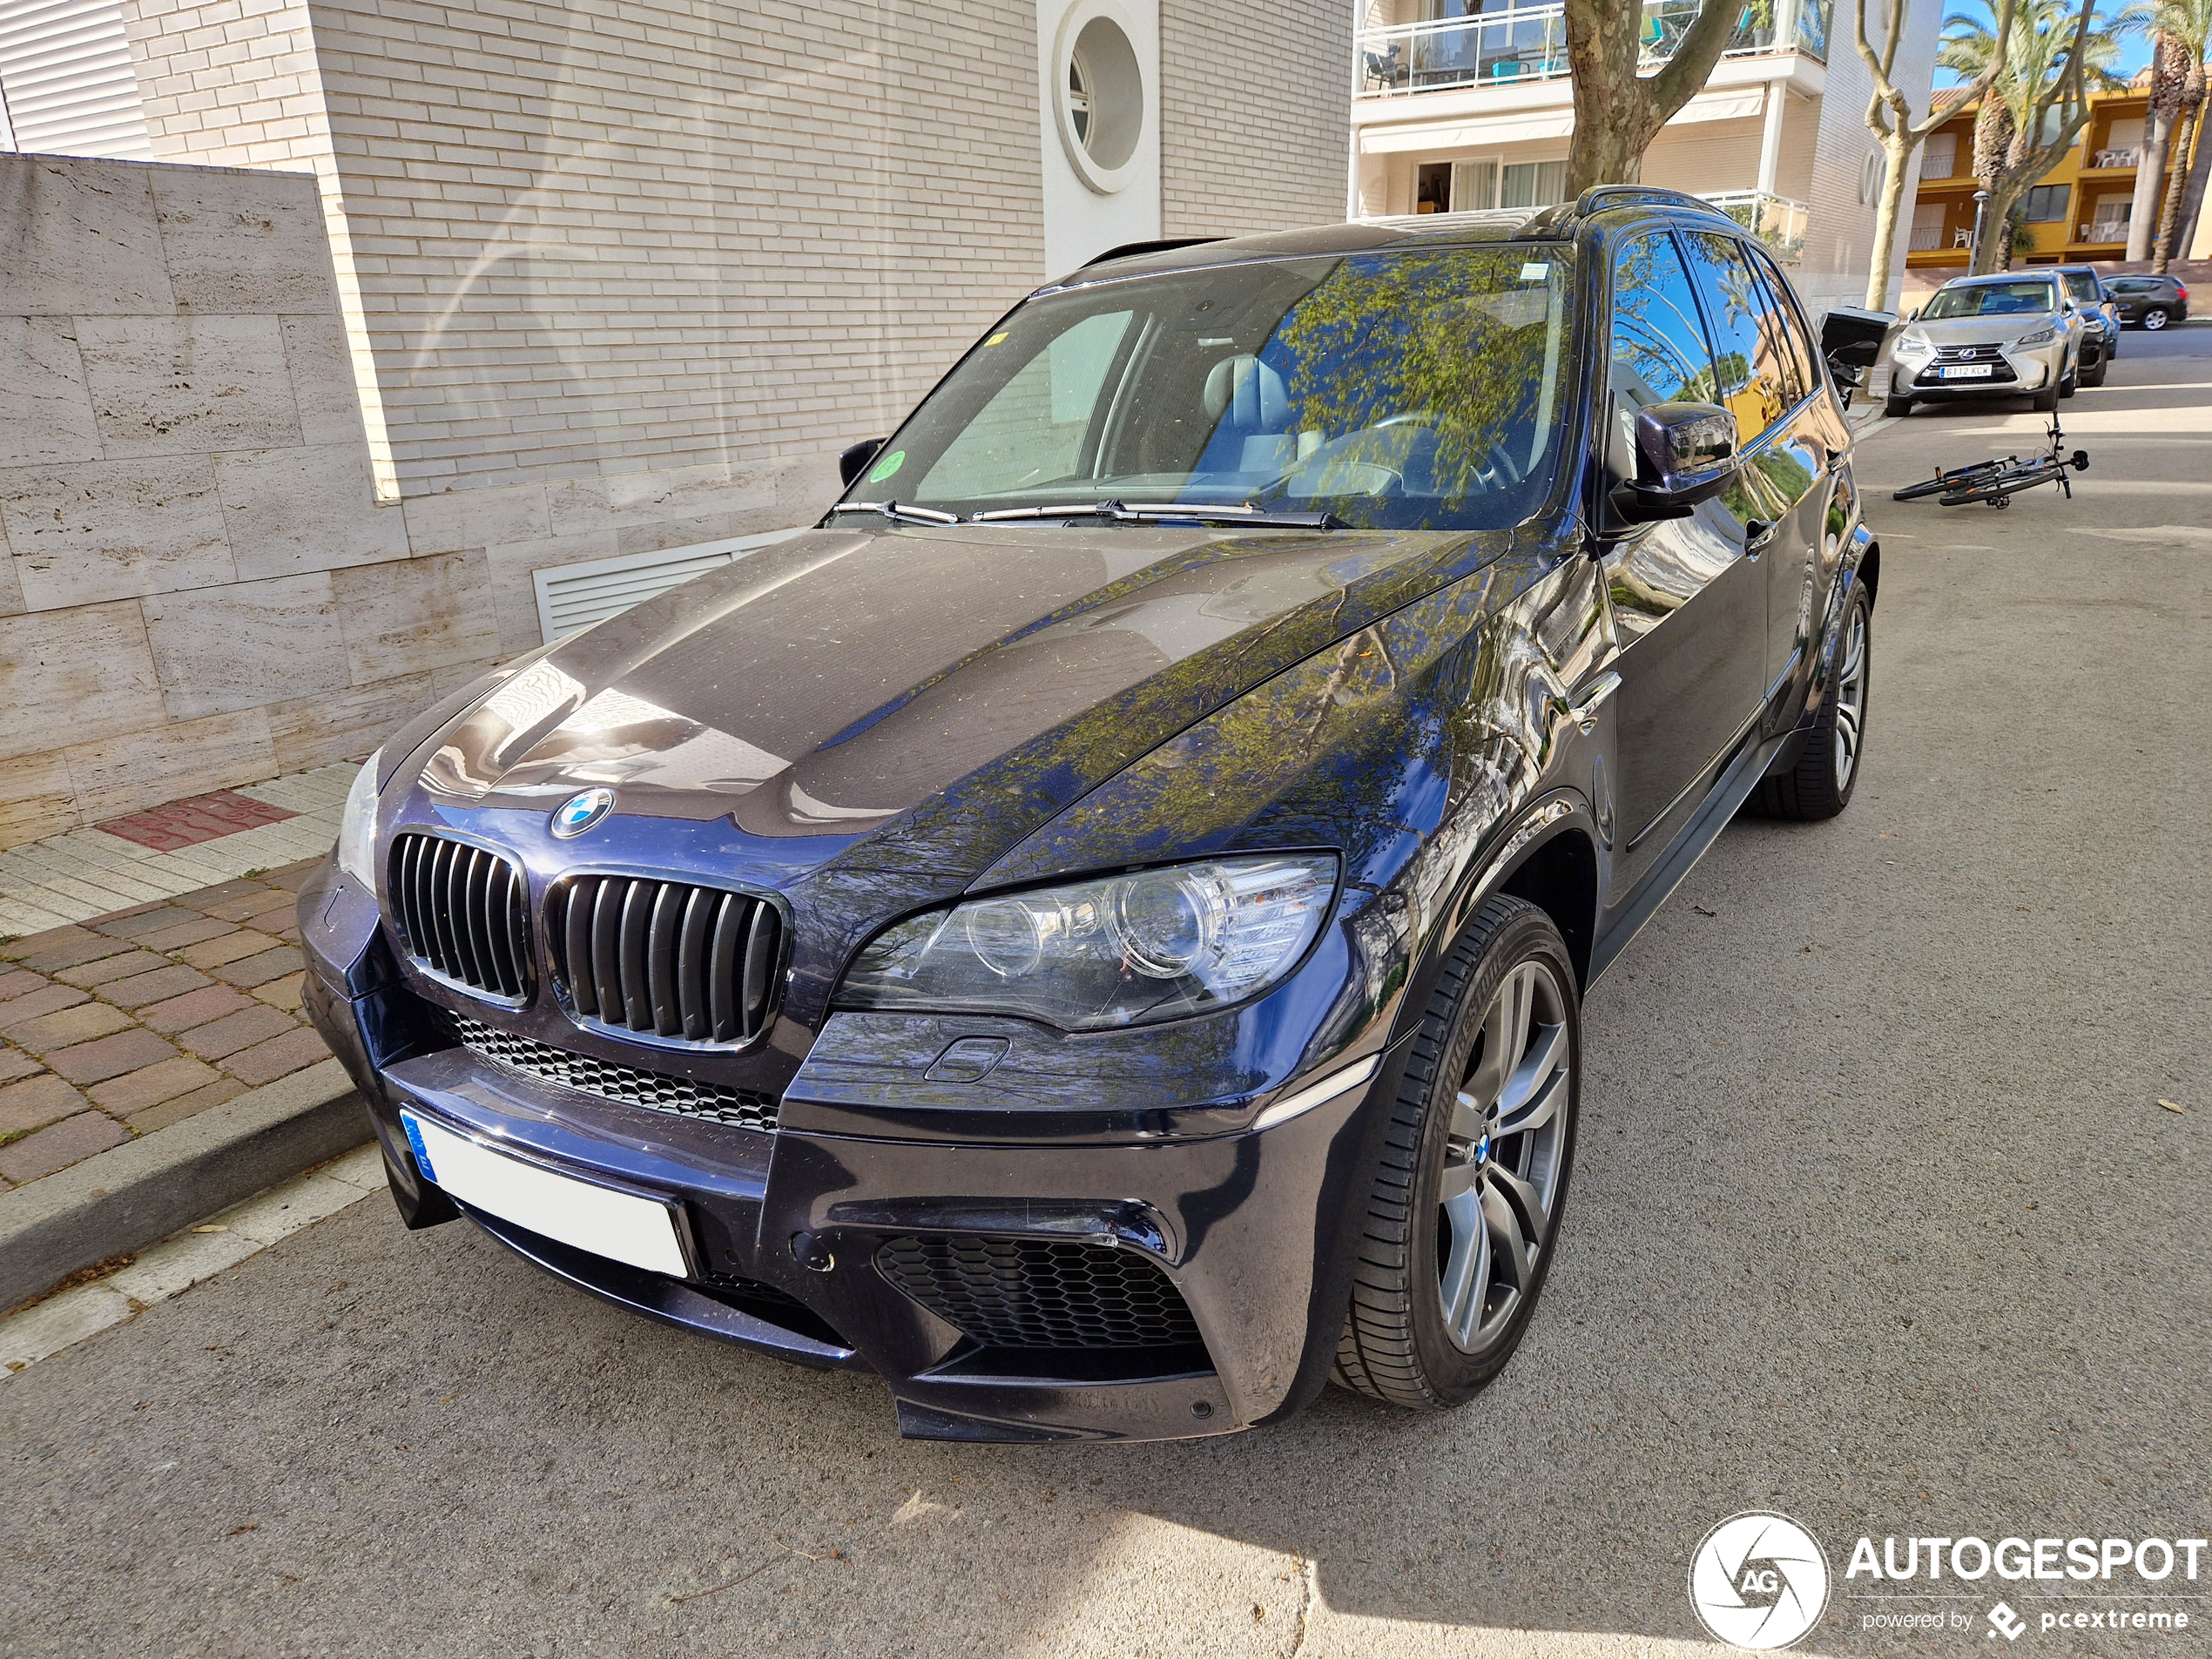 BMW X5 M E70 - 02-02-2021 21:23 - Autogespot